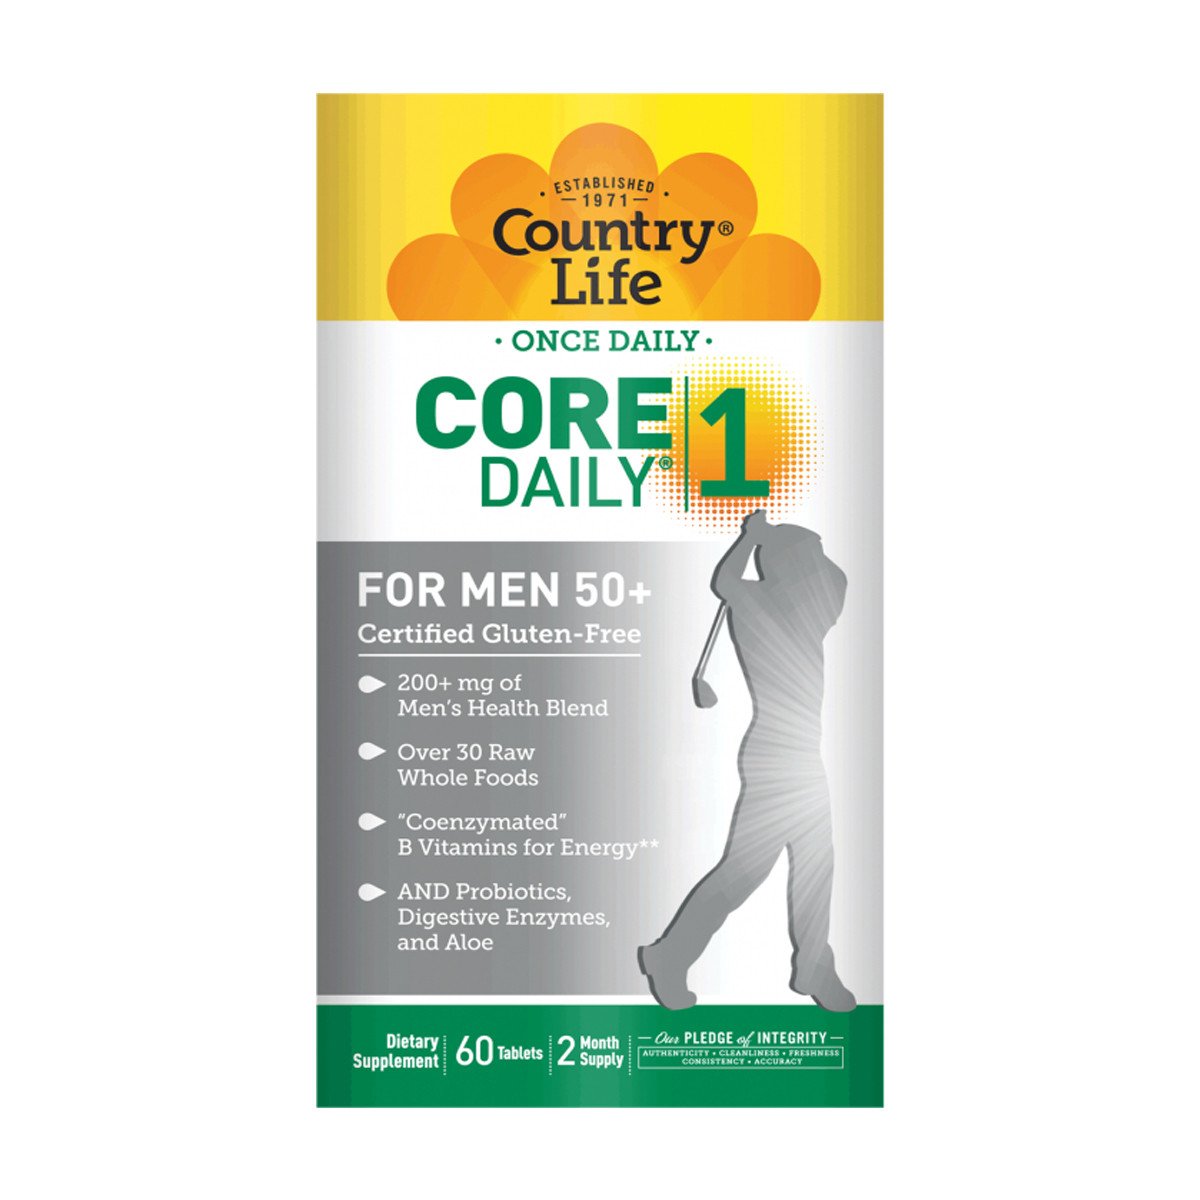 Country Life Мультивитамины для Мужчин, 50+, Core Daily-1 for Men 50+, Country Life, 60 таблеток, , 